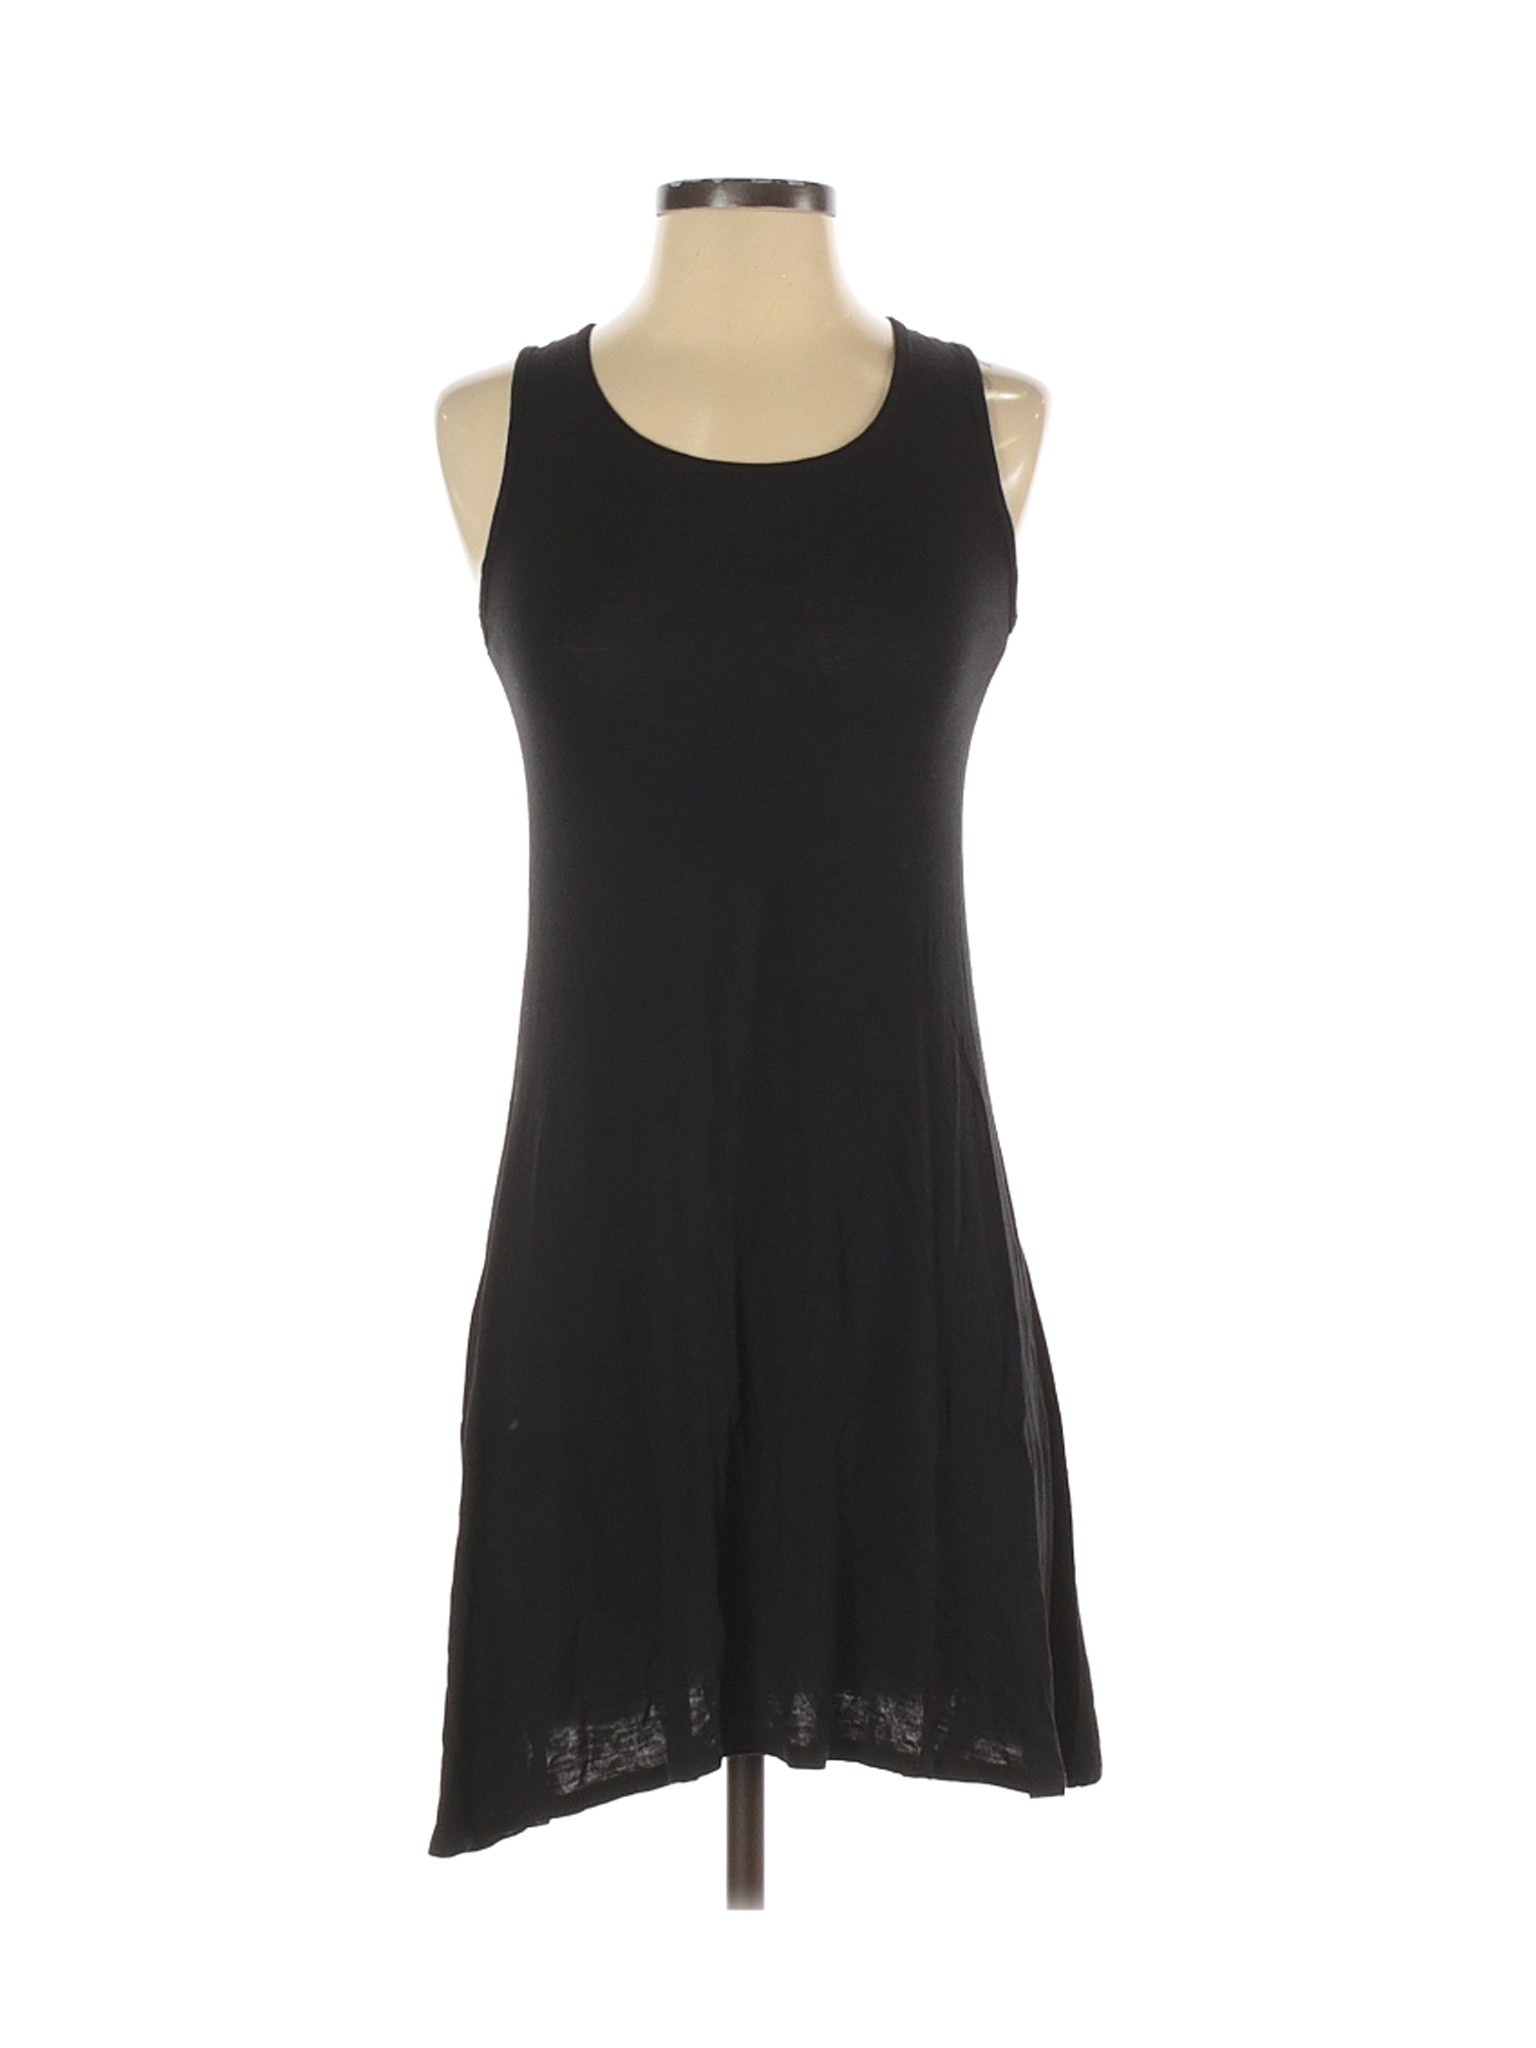 Olivia Rae Women Black Casual Dress S | eBay